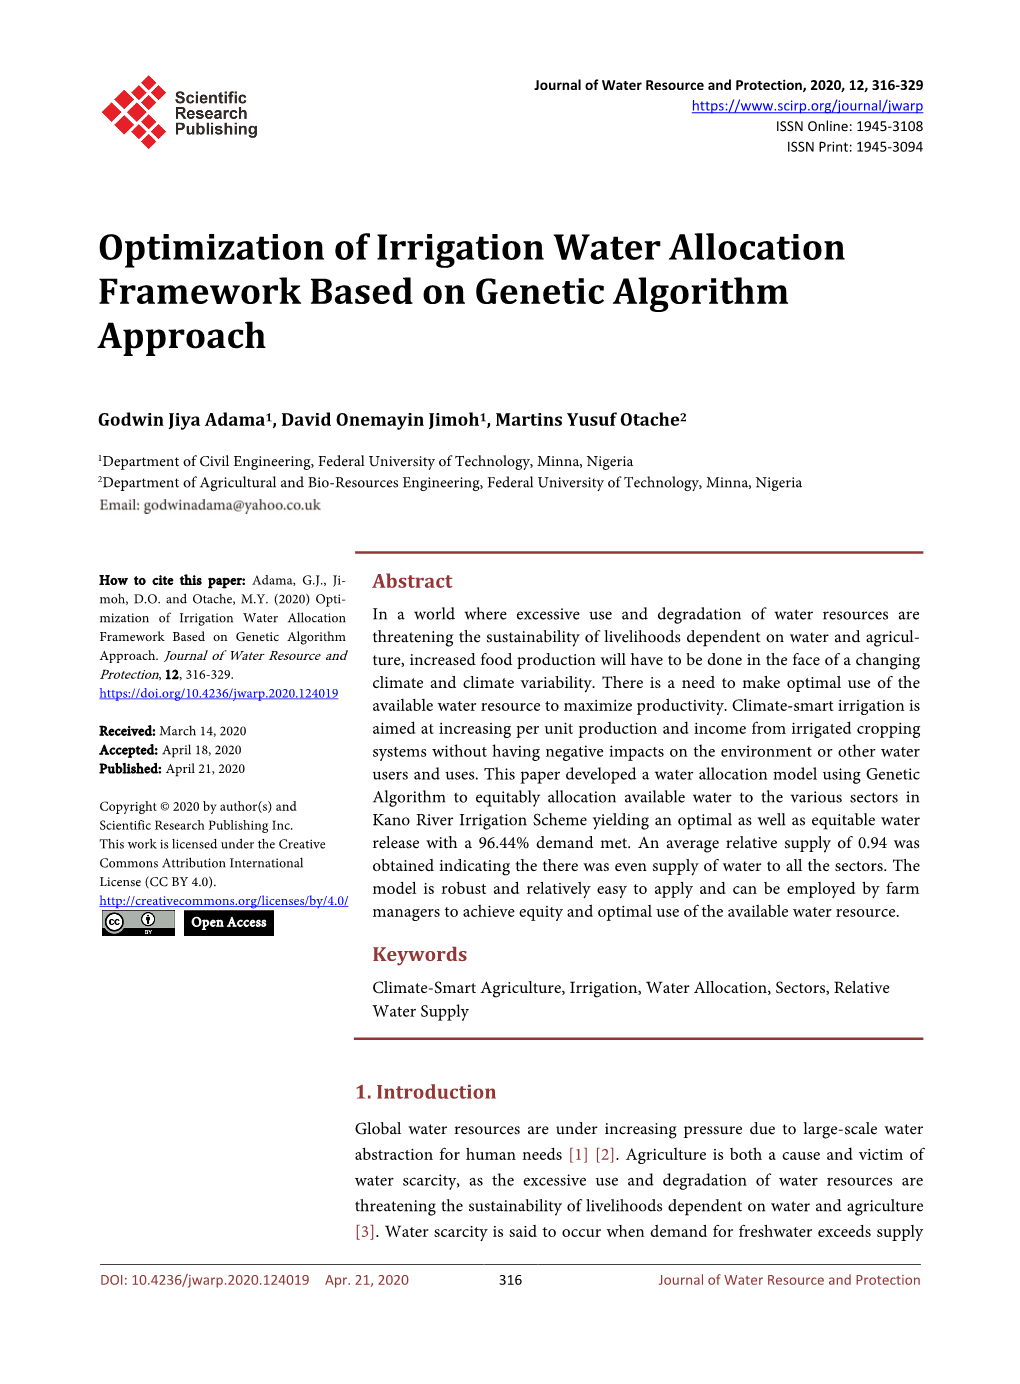 Optimization of Irrigation Water Allocation Framework Based on Genetic Algorithm Approach